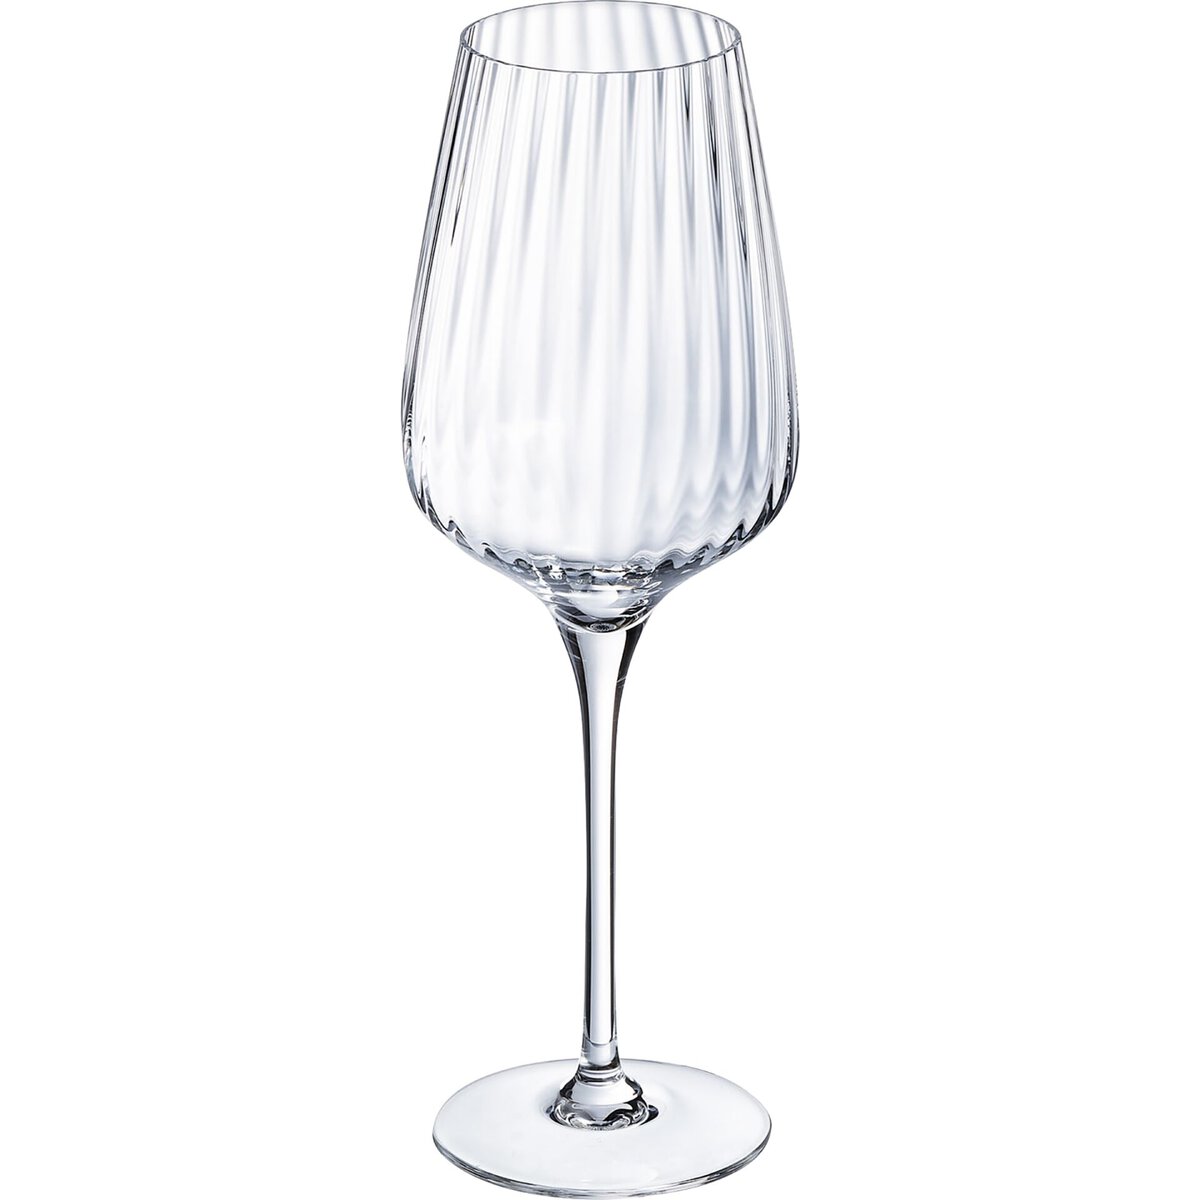 Glasserie "Symetrie" Rotweinglas 475ml mit Füllstrich (1)